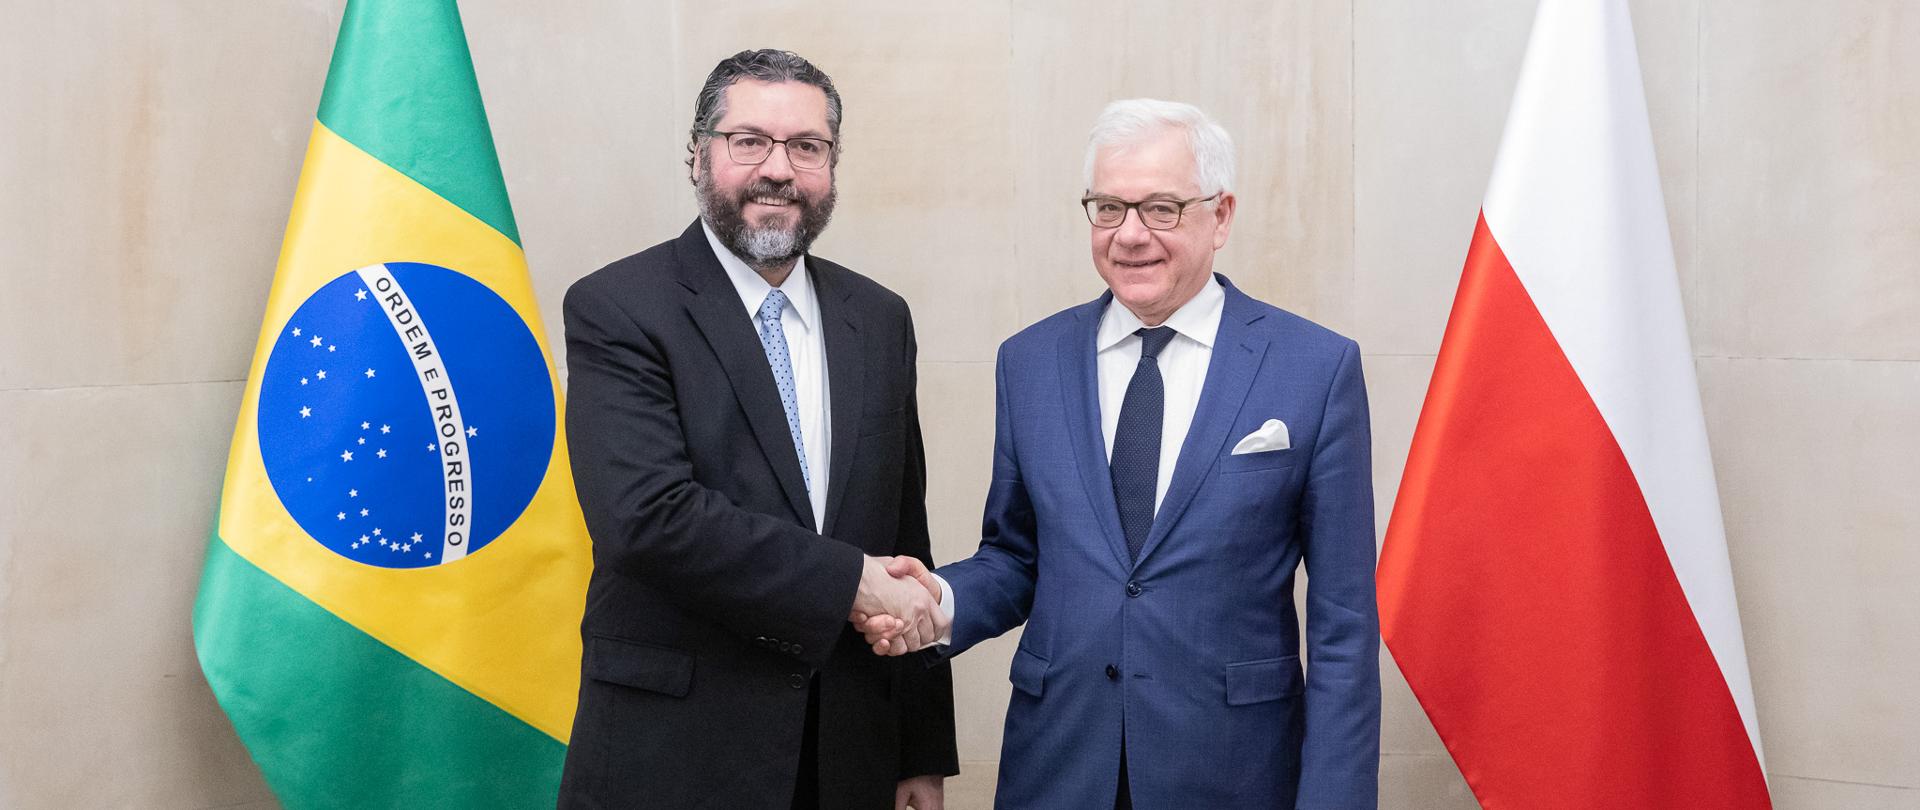 Brazil’s Foreign Minister visits Poland